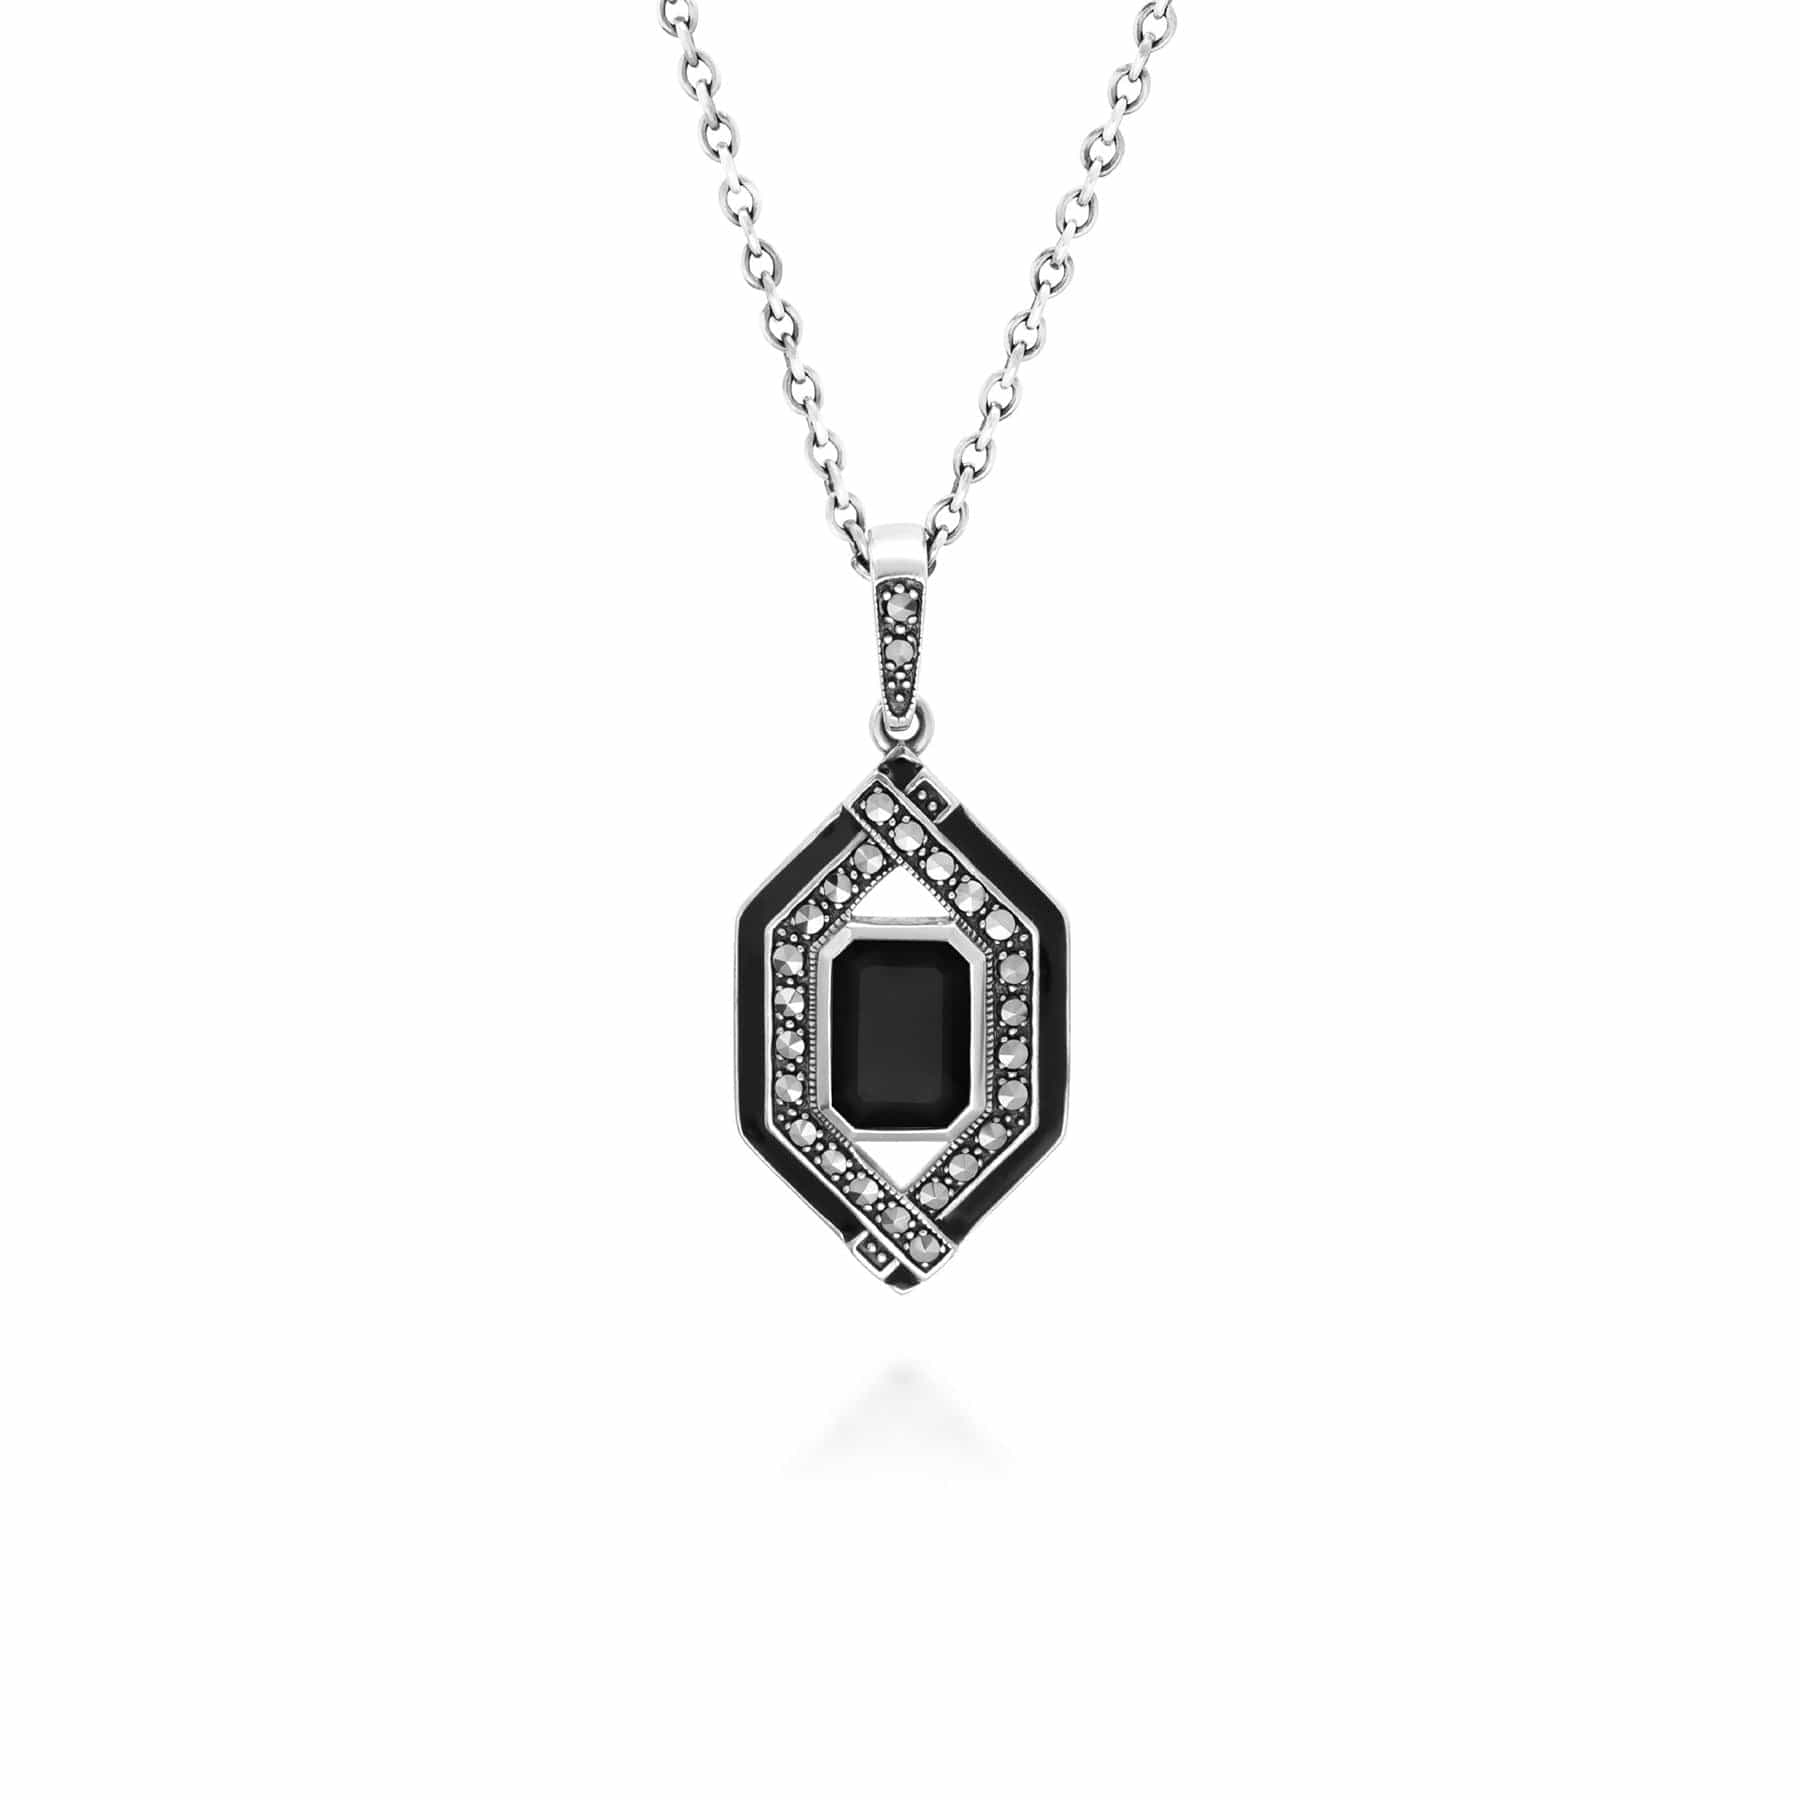 Art Deco Inspired Black Spinel, Enamel & Marcasite Necklace in Sterling Silver - Gemondo